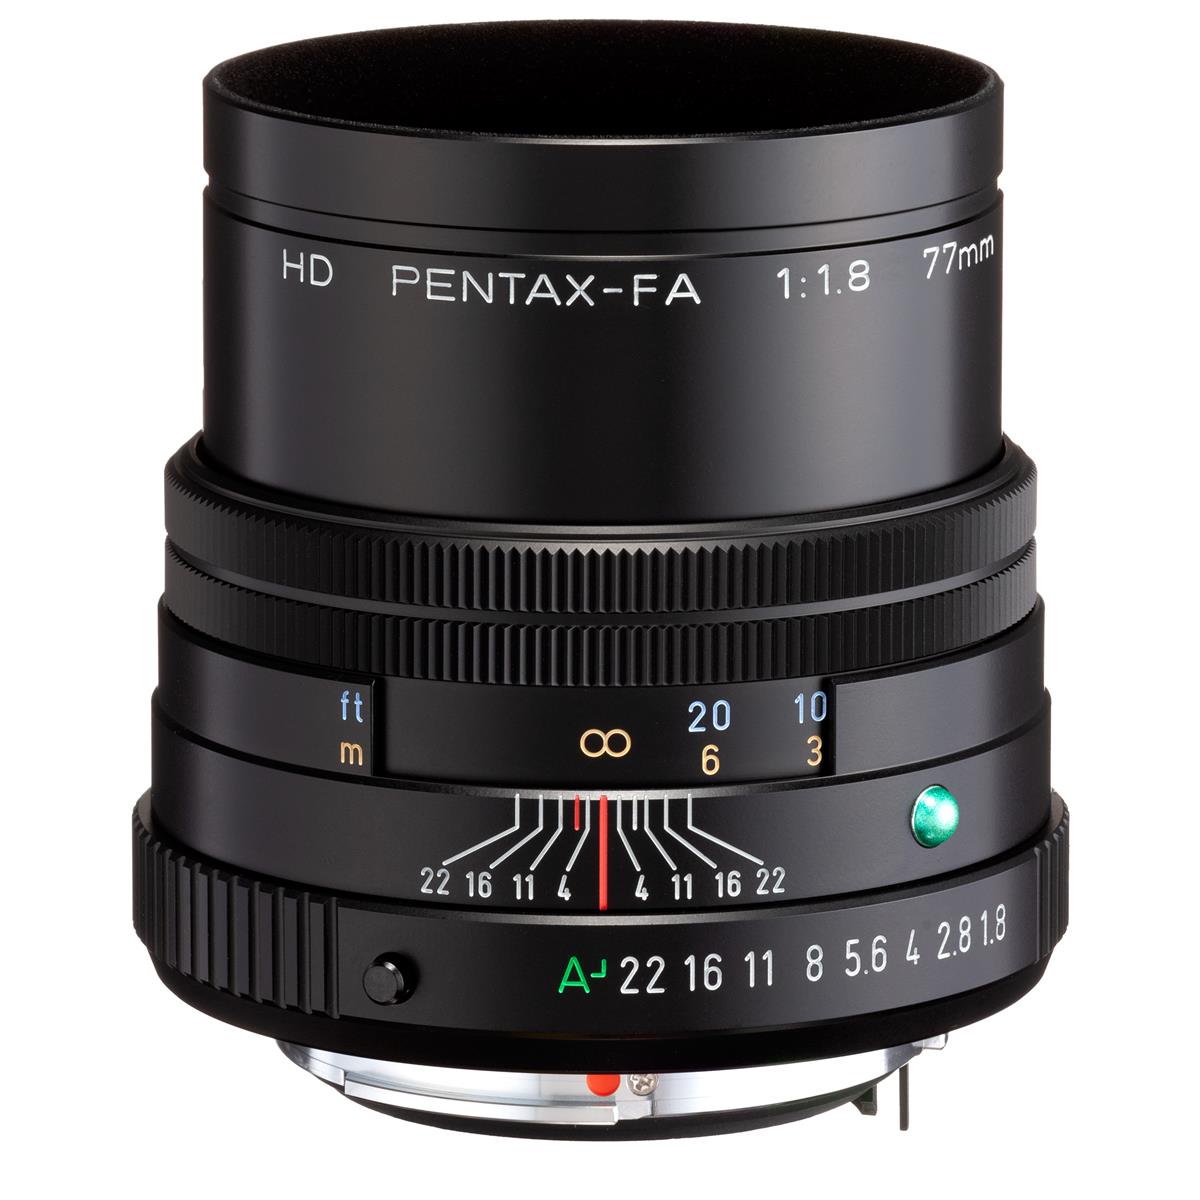 Image of Pentax HD Pentax-FA 77mm f/1.8 Limited Lens